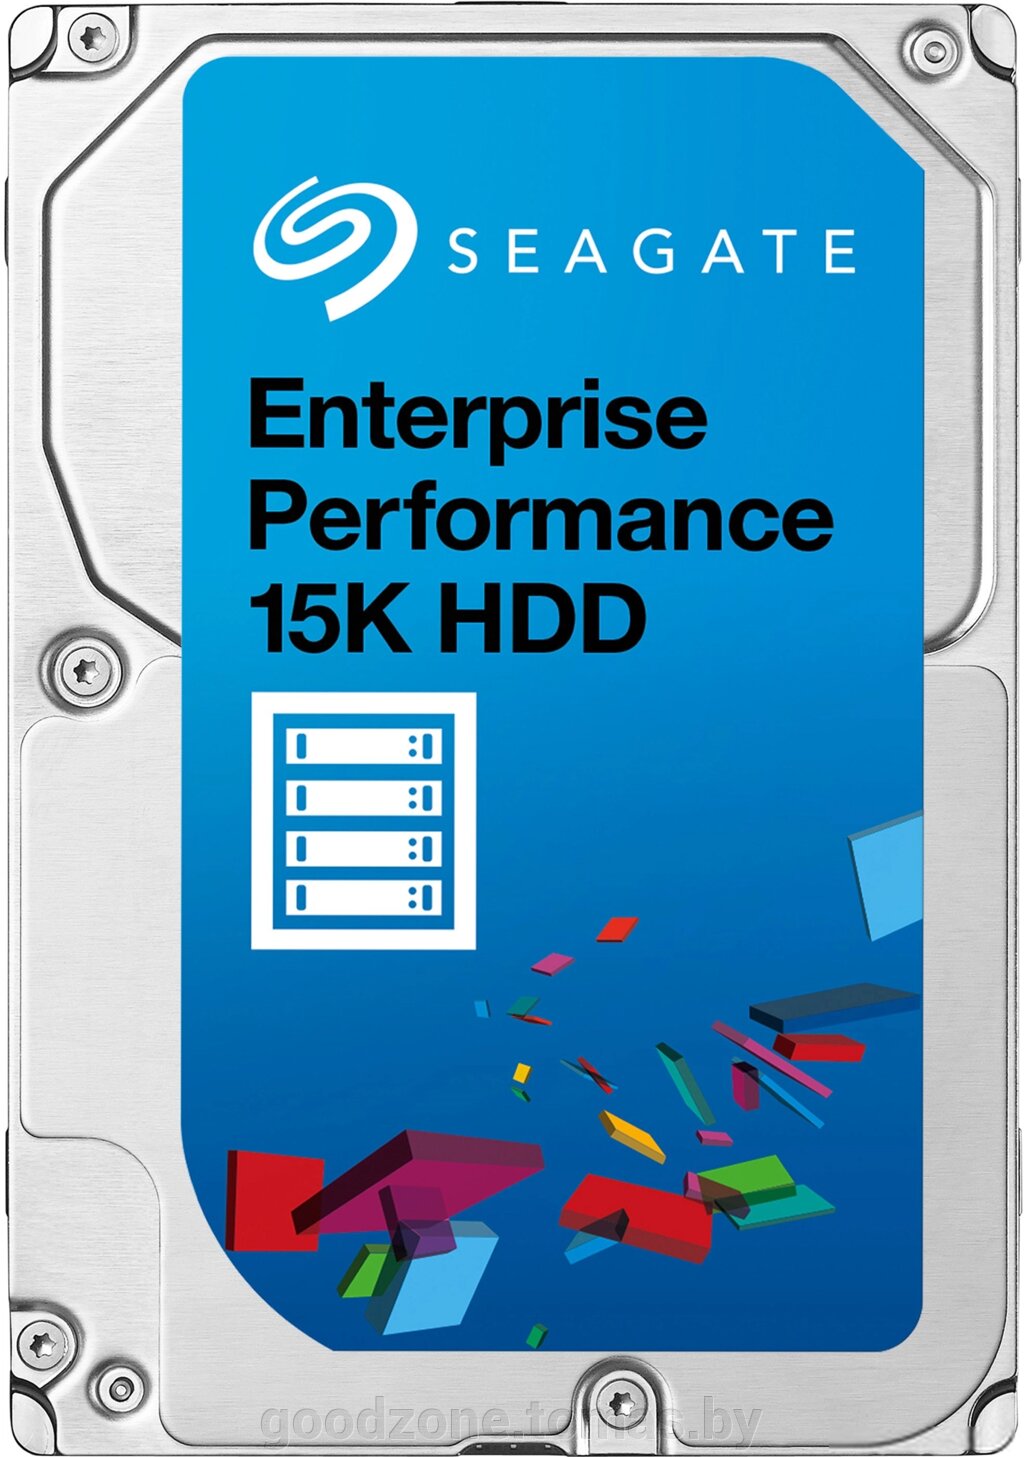 Жесткий диск Seagate Enterprise Performance 15K 300GB [ST300MP0006] от компании Интернет-магазин «Goodzone. by» - фото 1